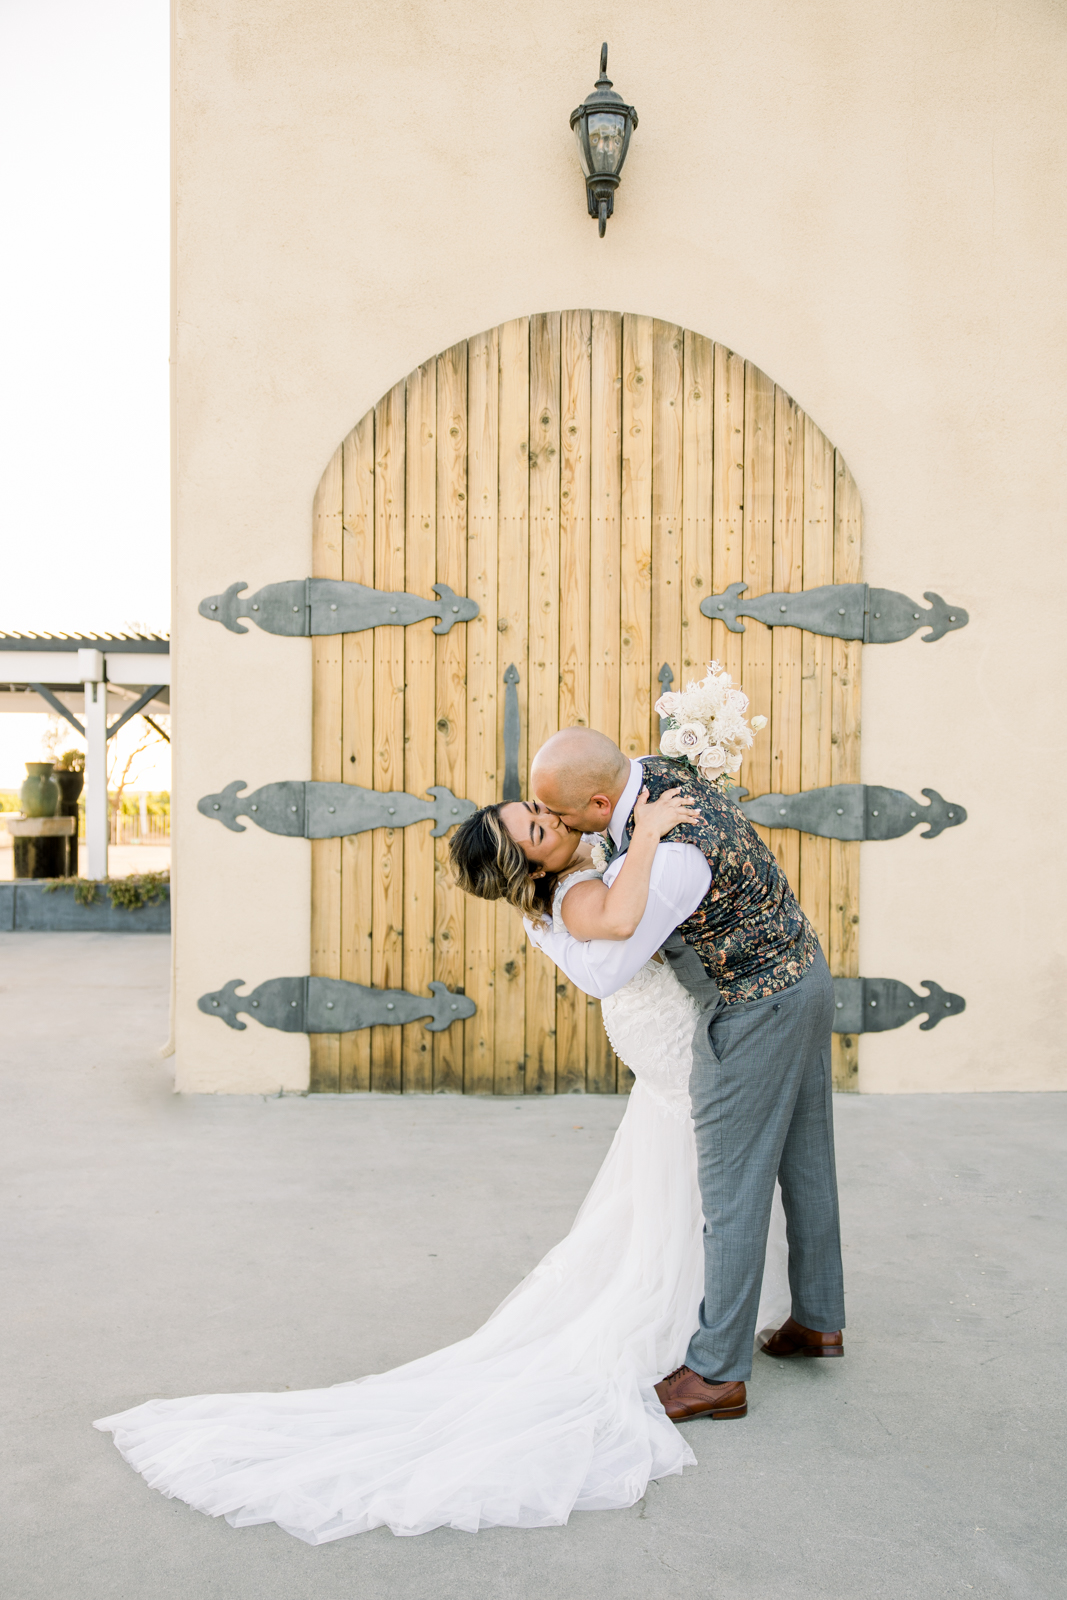 Sunset bride and groom portraits at Evanelle Vineyards wedding by Fresno photographer Ashley Norton Photography